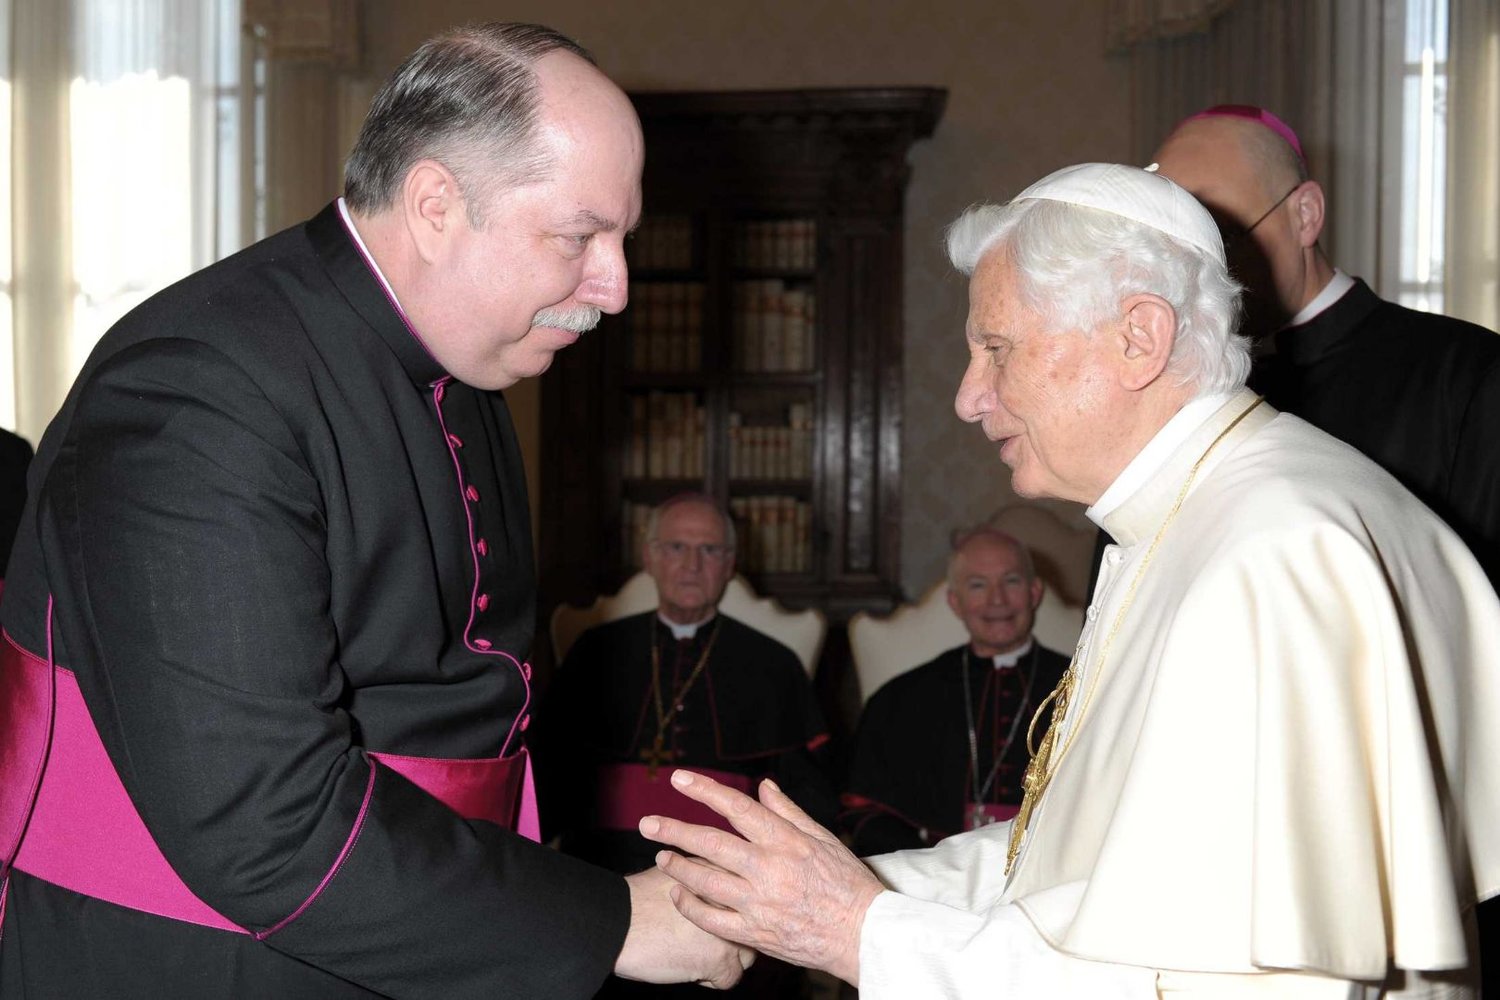 Monsignor Robert A. Kurwicki VG greets Pope Benedict XVI during Bishop John R. Gaydos’s ad limina visit to the Vatican in 2012.